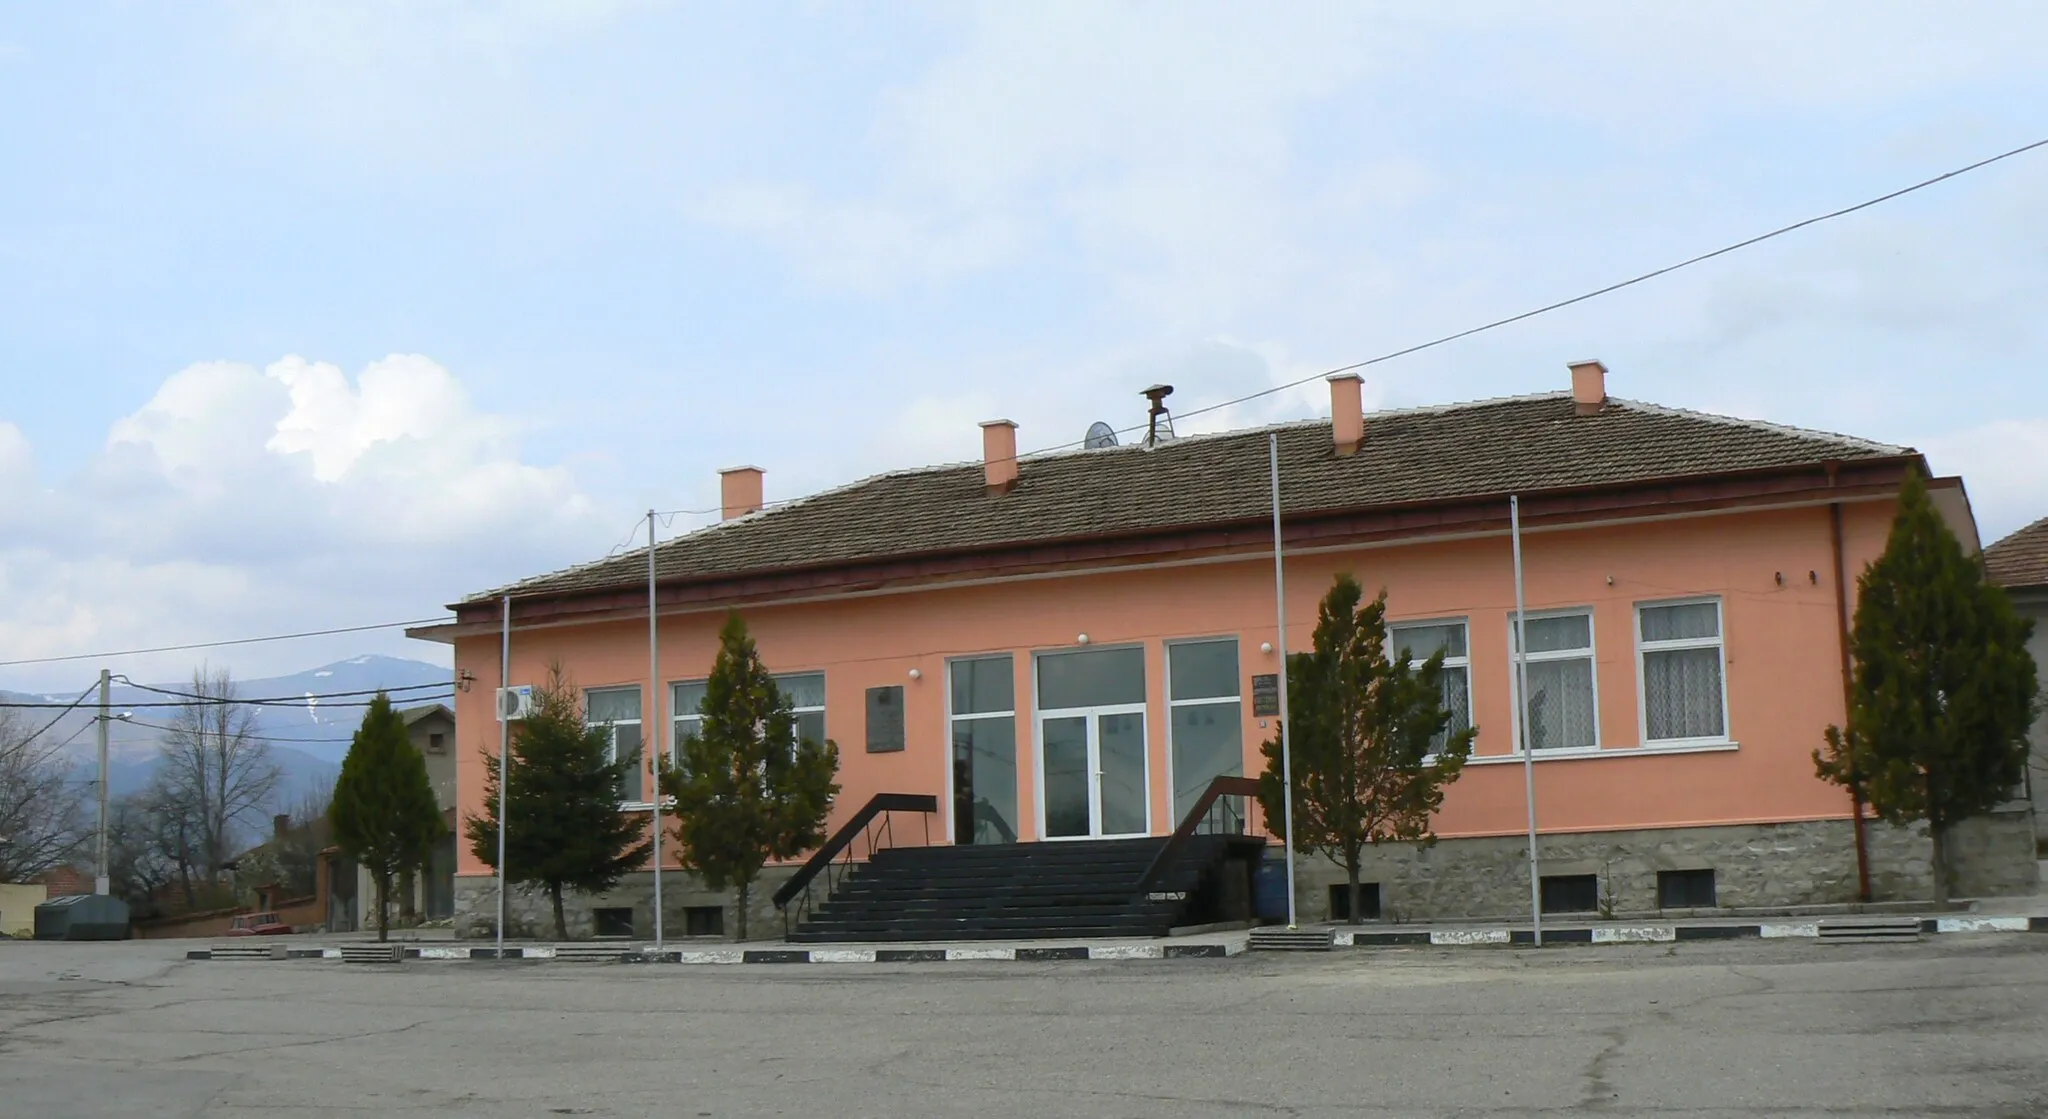 Photo showing: The mayor's office in village Karlievo, Bulgaria